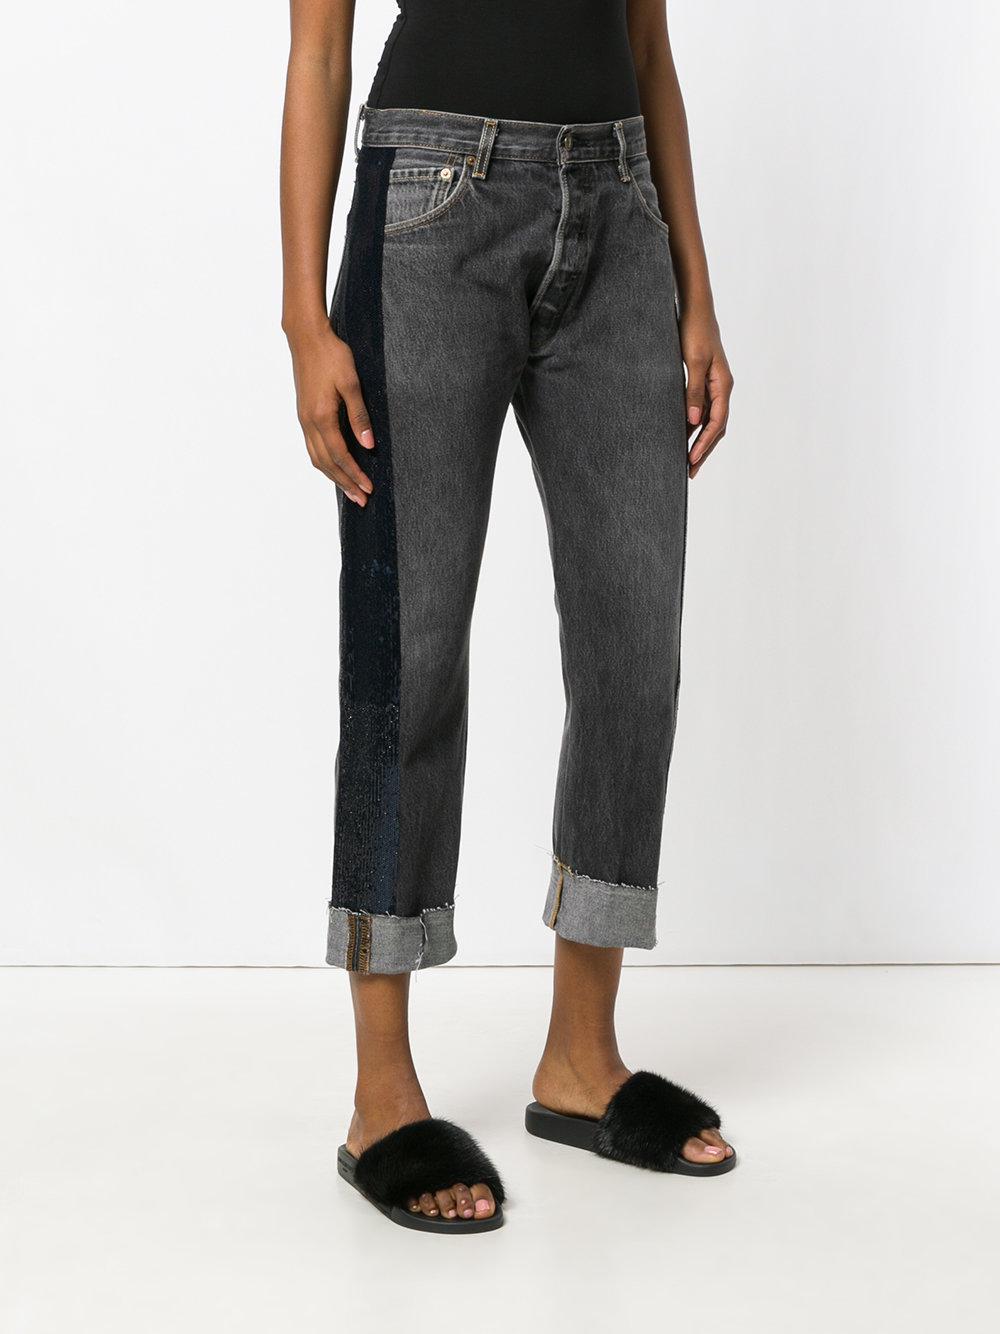 Kendall + Kylie Denim Sequin Stripe Cropped Jeans in Black - Lyst